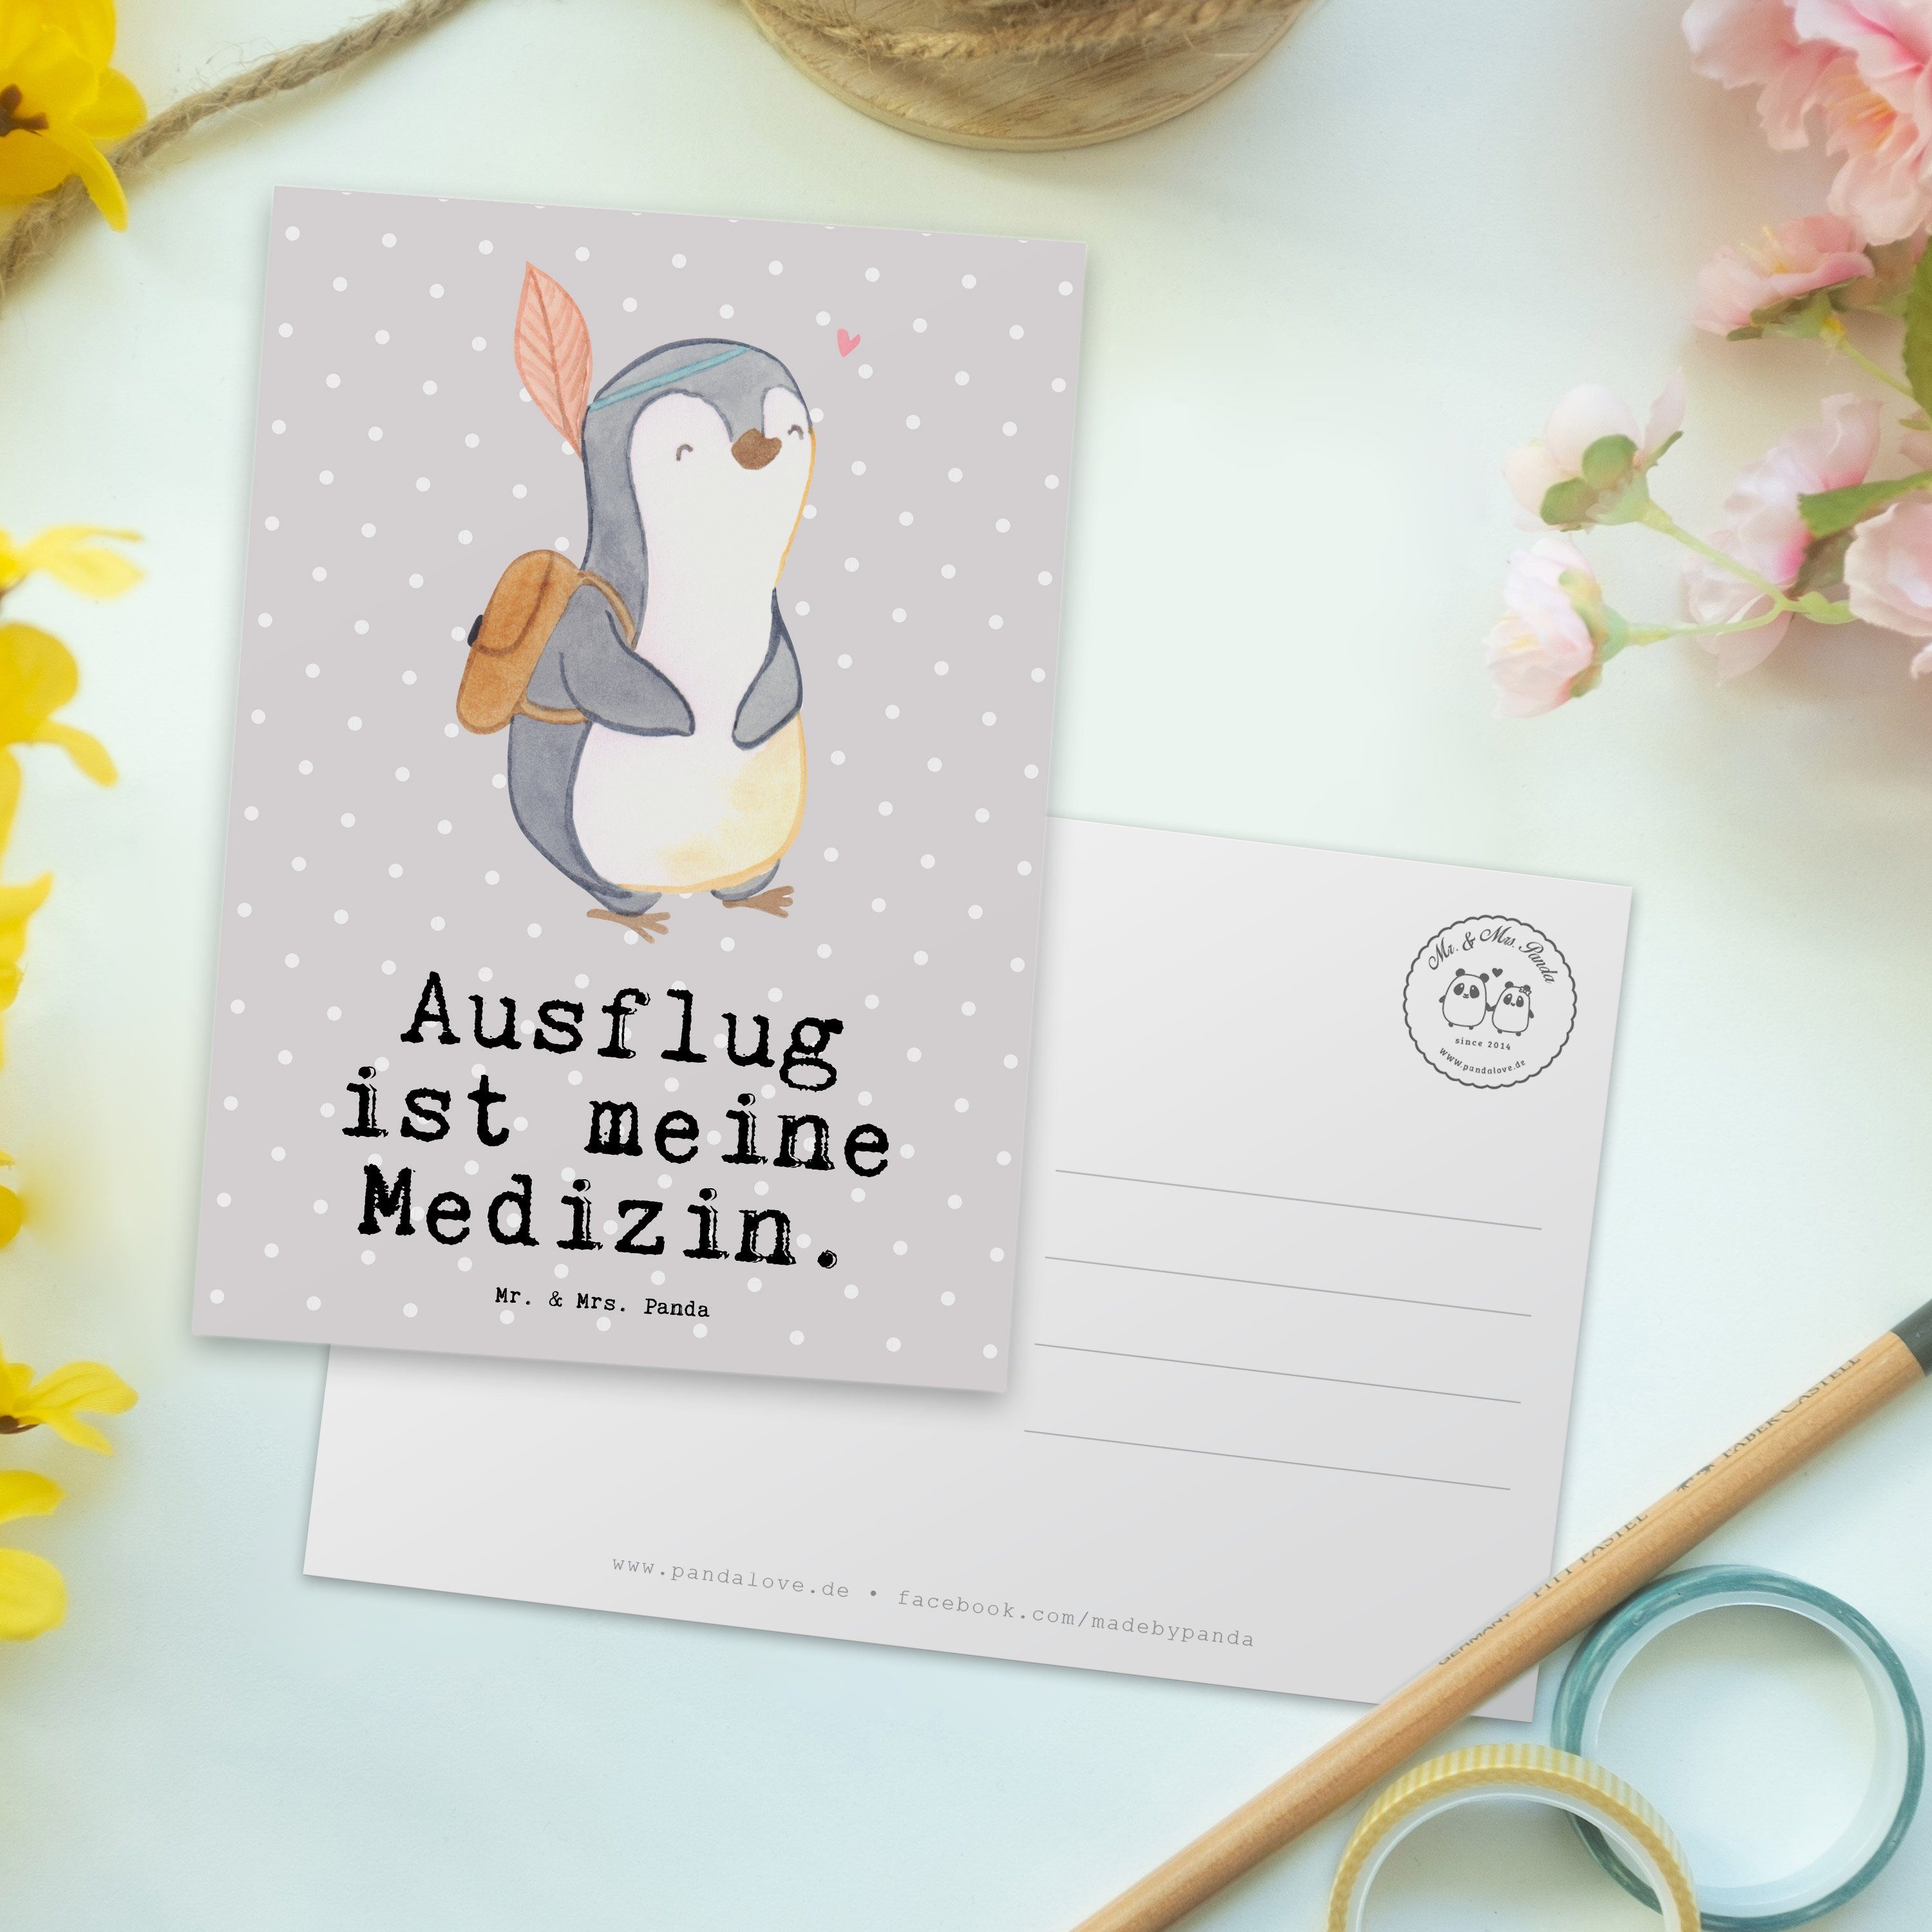 Medizin Grau - Ausflug Pinguin Mrs. - Mr. Panda Postkarte Geschenk, Pastell Danke, reis & Hobby,